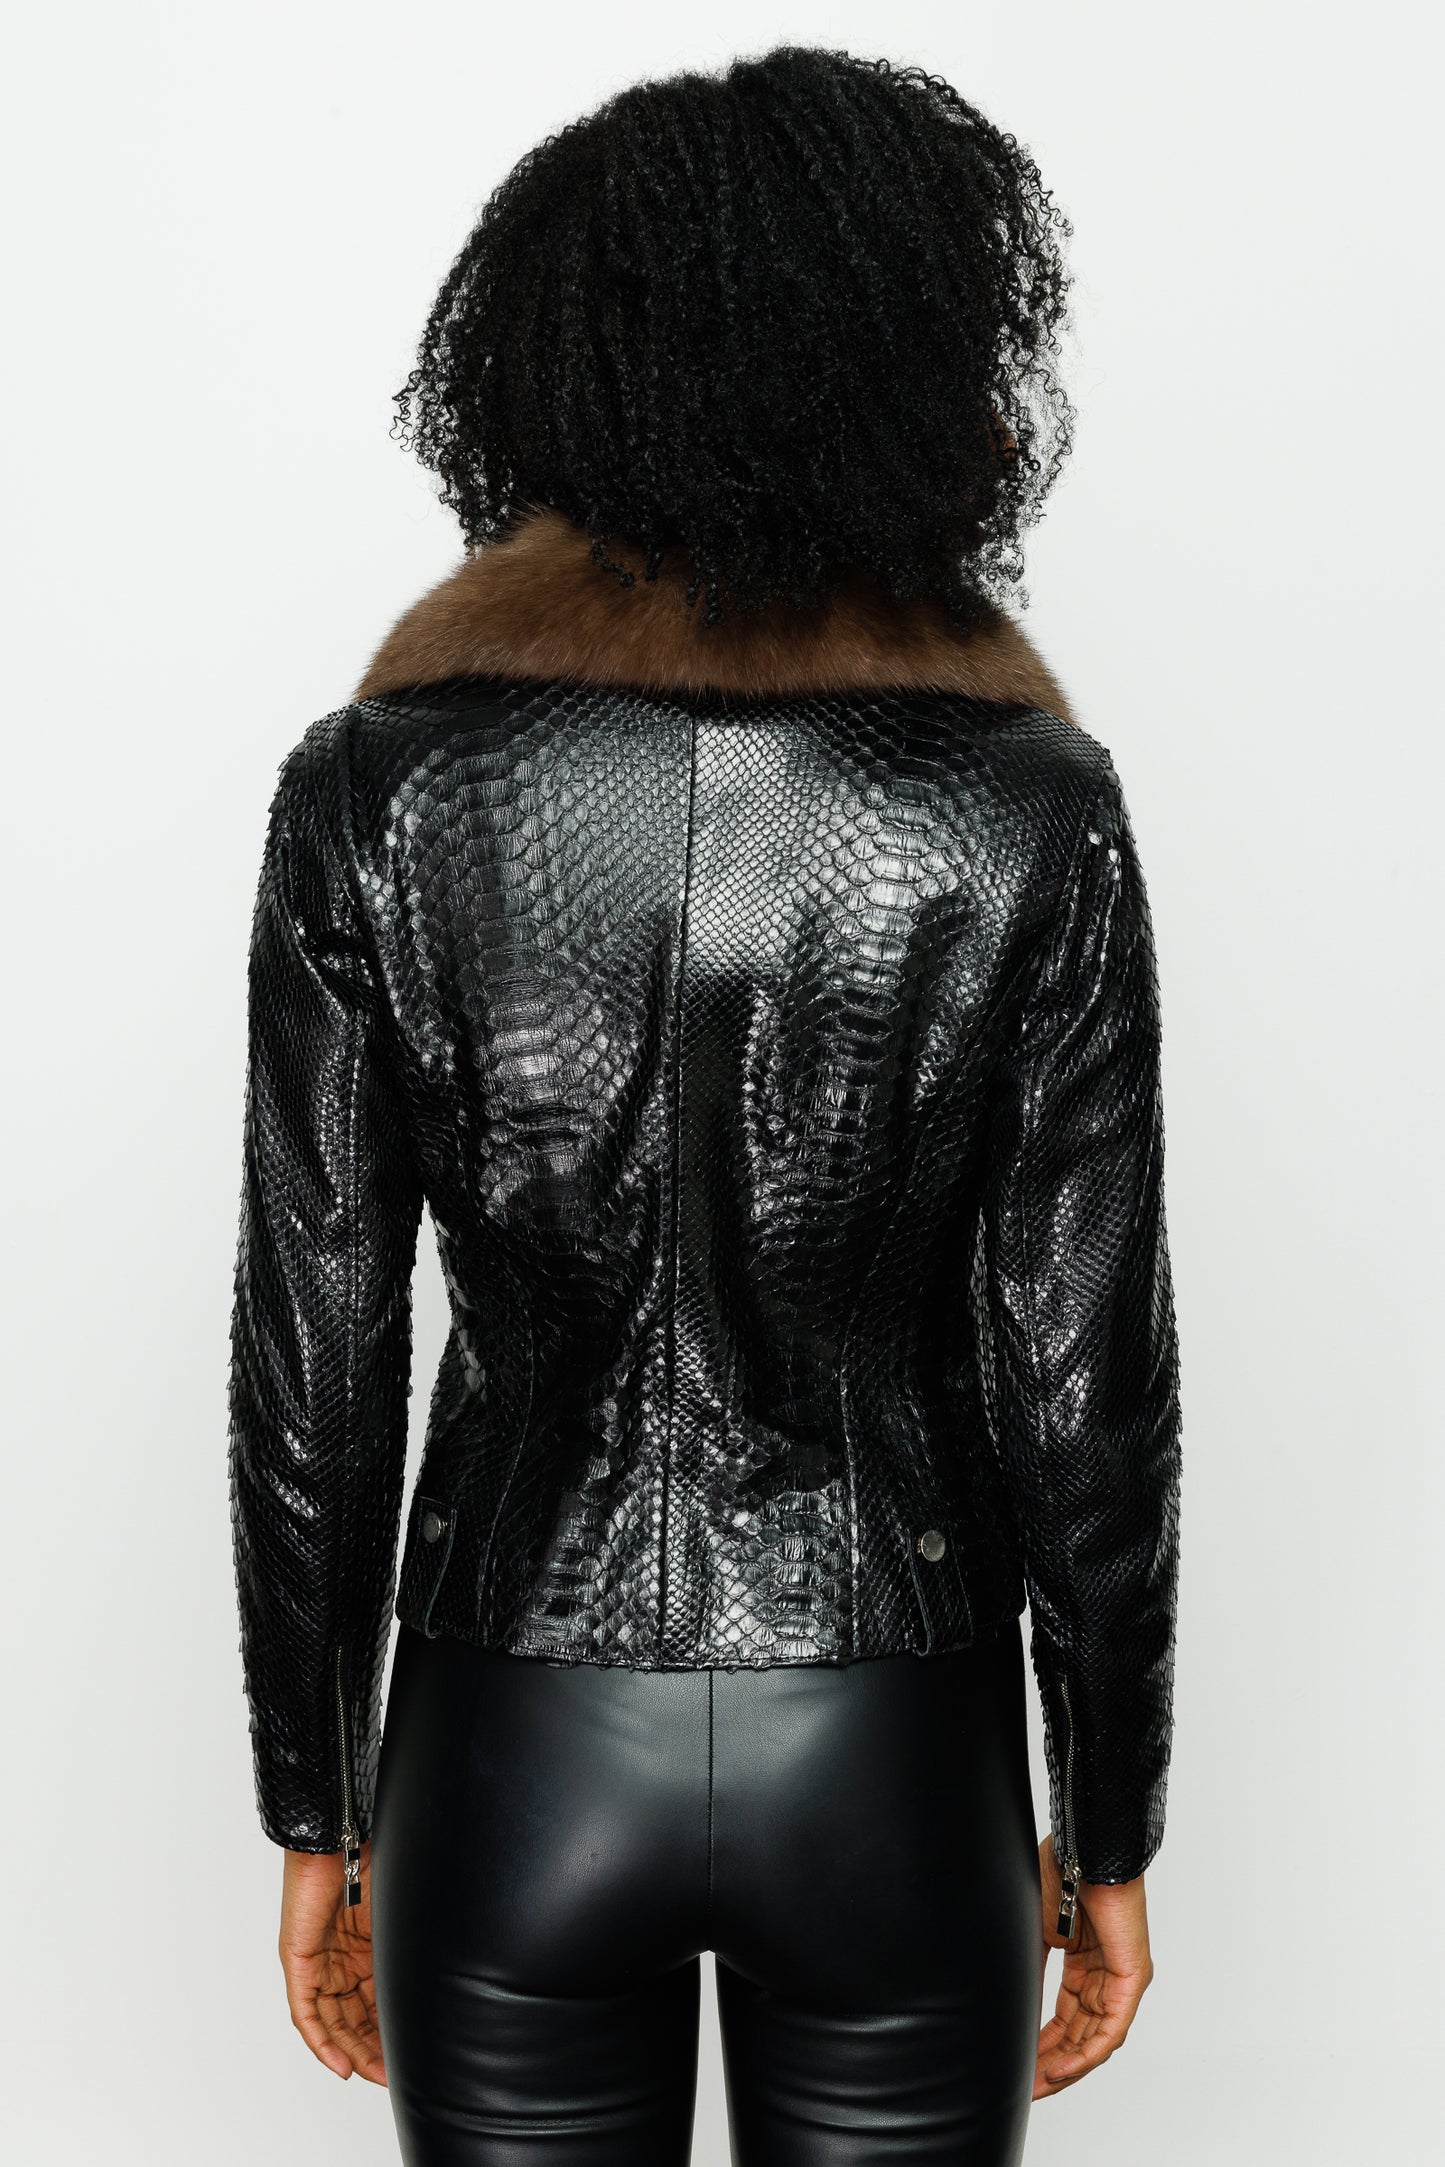 The Formello Pythn Black Leather Jacket